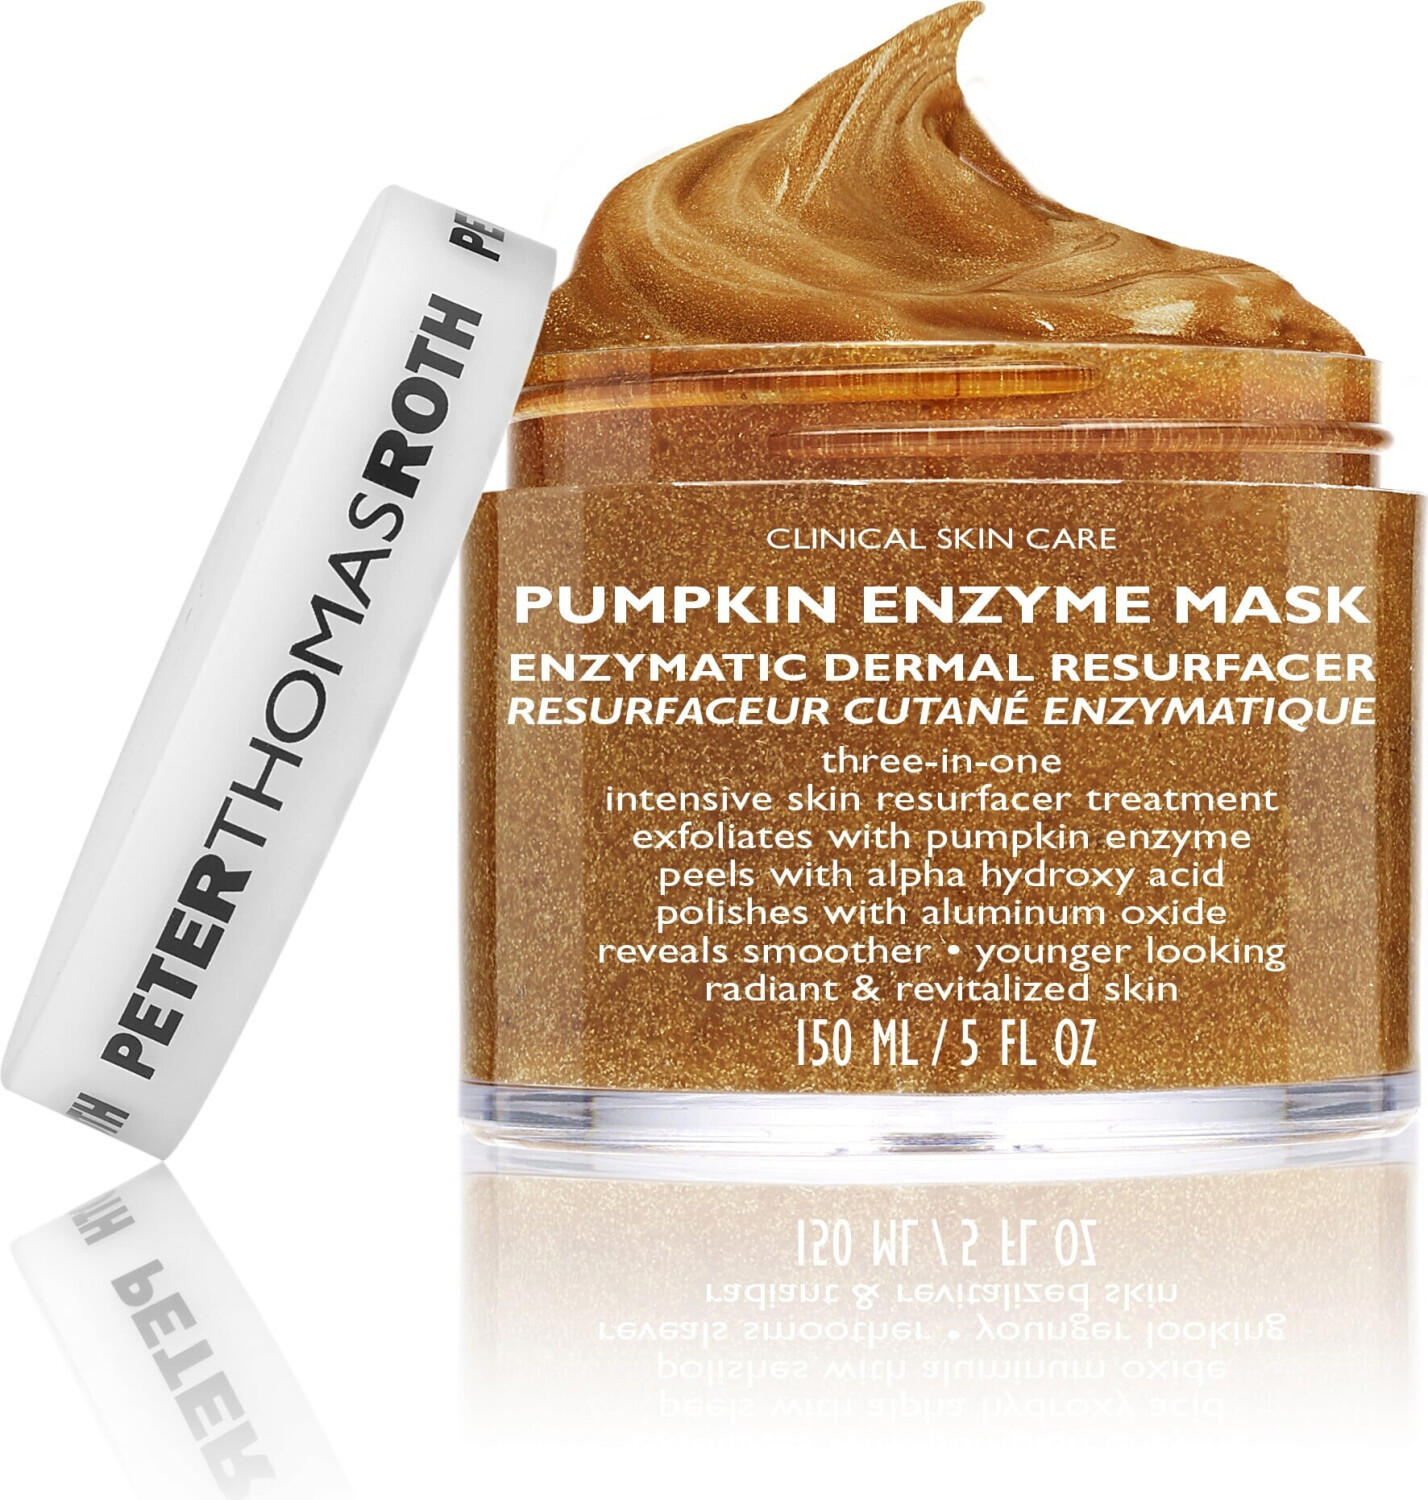 Peter Thomas Roth Pumpkin Enzyme Mask (150ml)